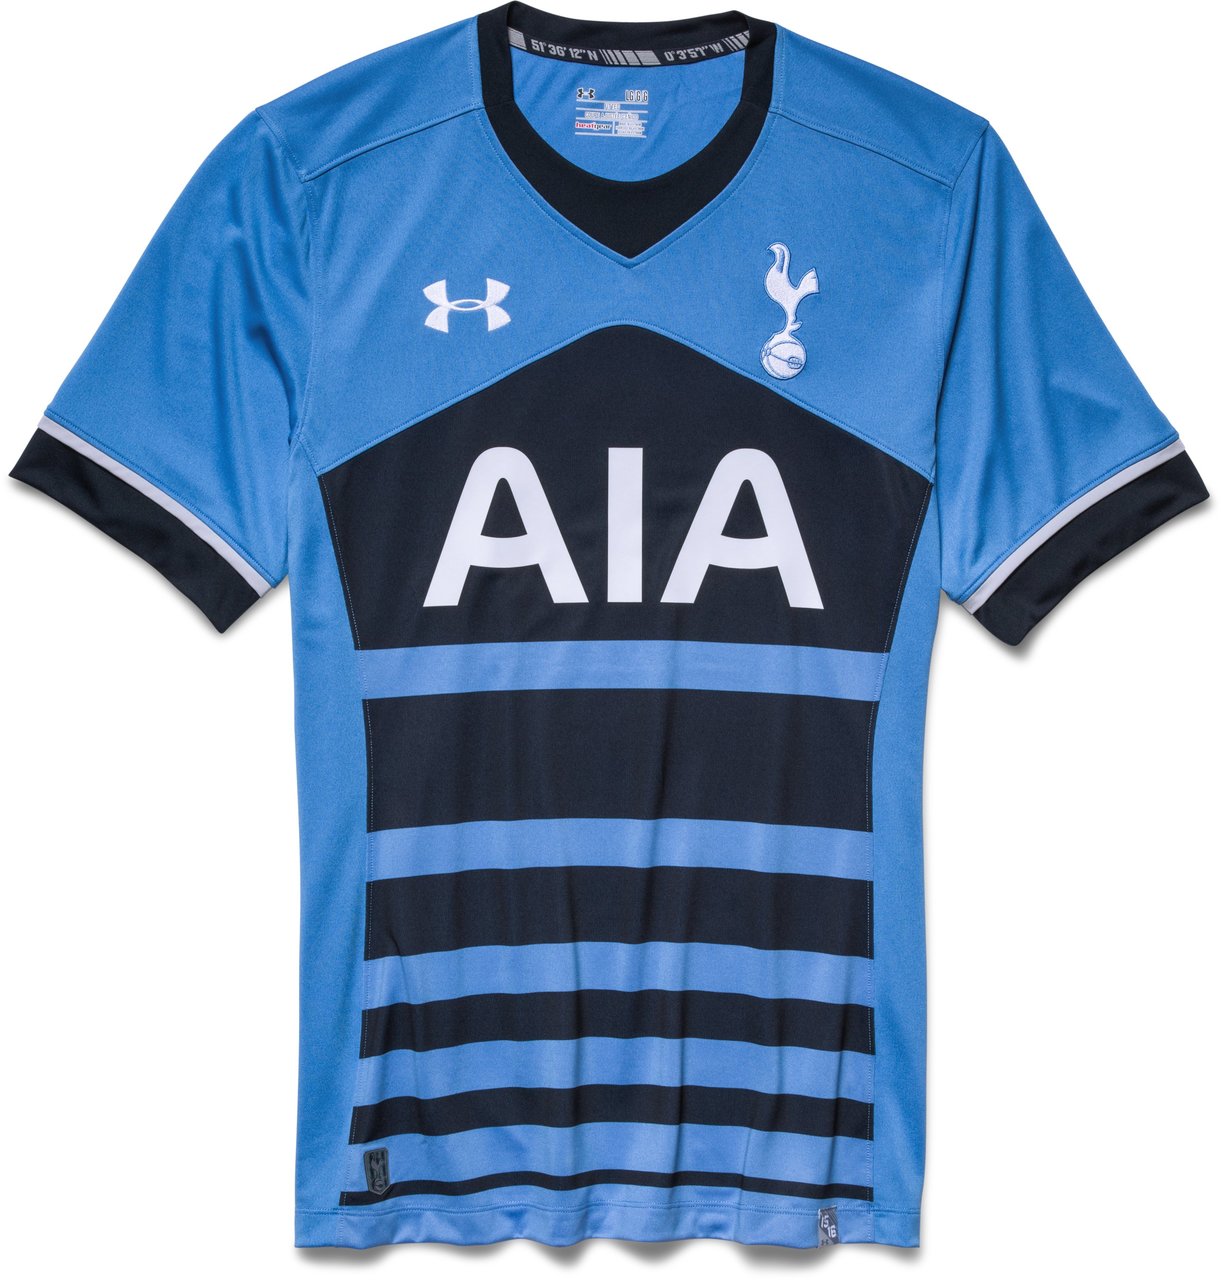 Tottenham Hotspur 15/16 Under Armour Away Kit - Football Shirt